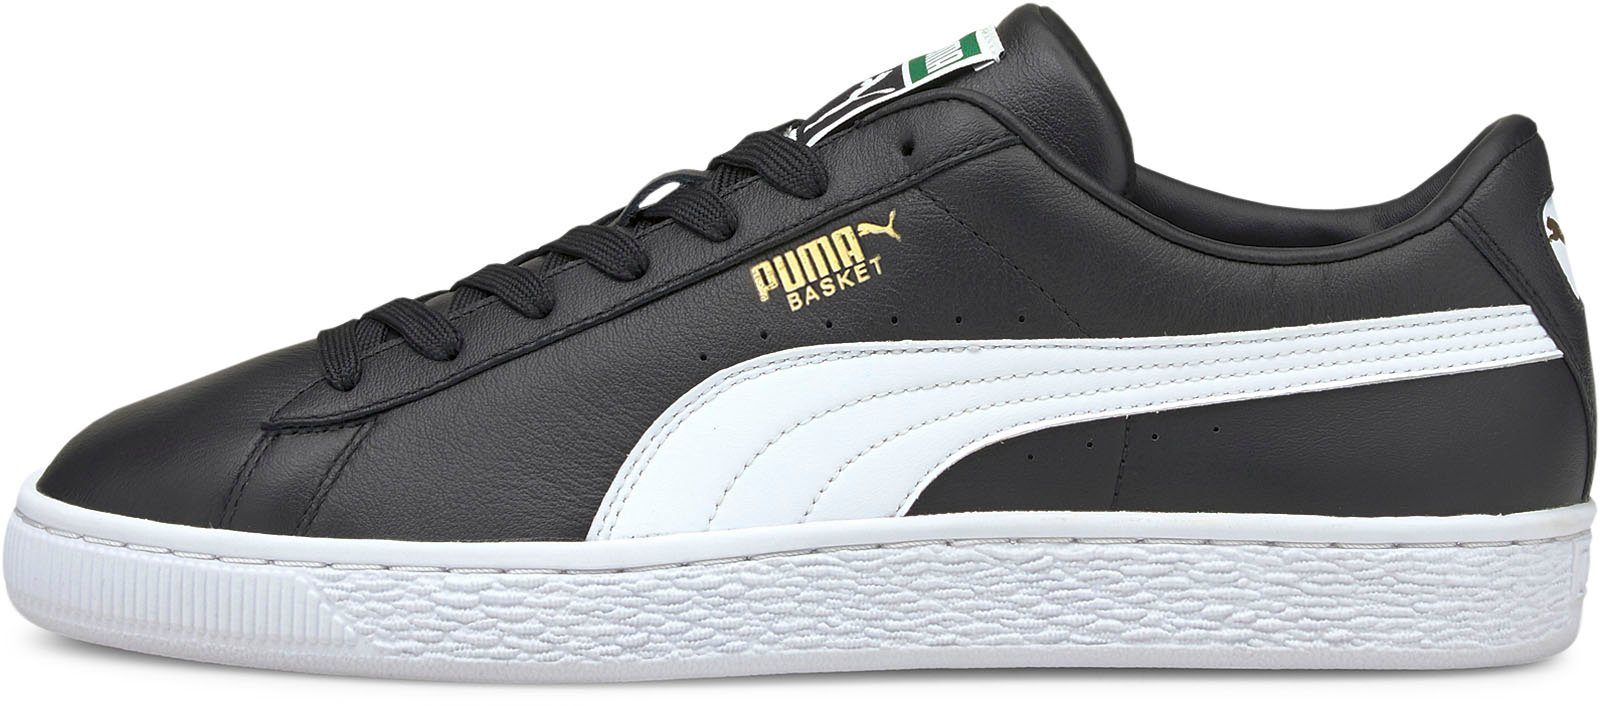 XXI Basket White Black Classic PUMA Sneaker